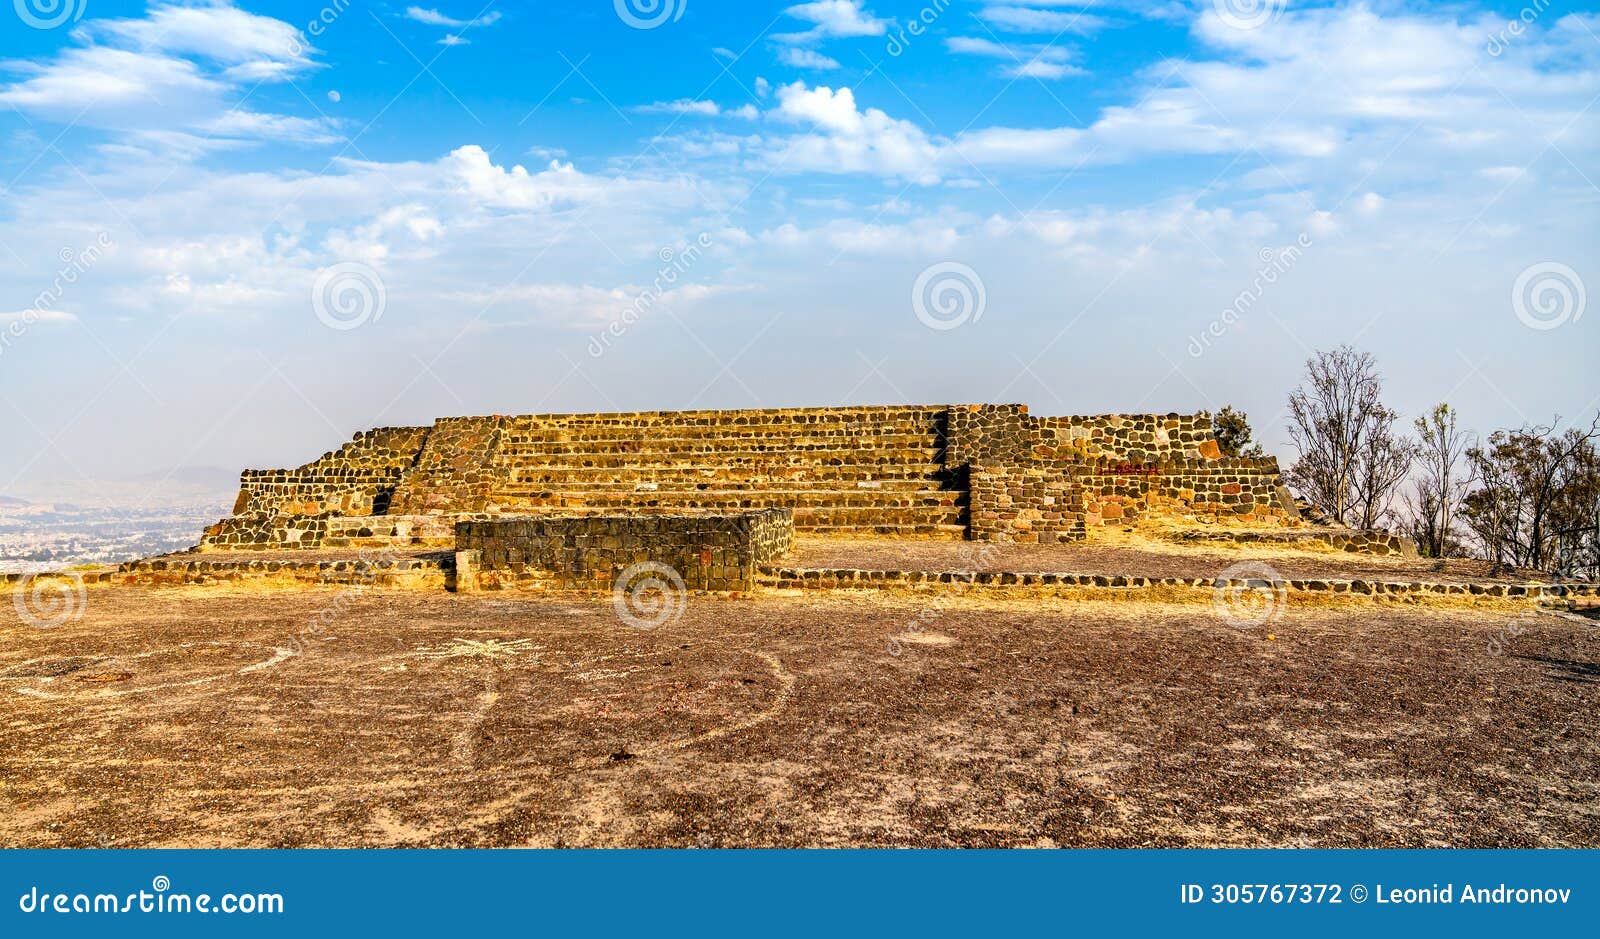 cerro de la estrella archaeological site in iztapalapa, mexico city